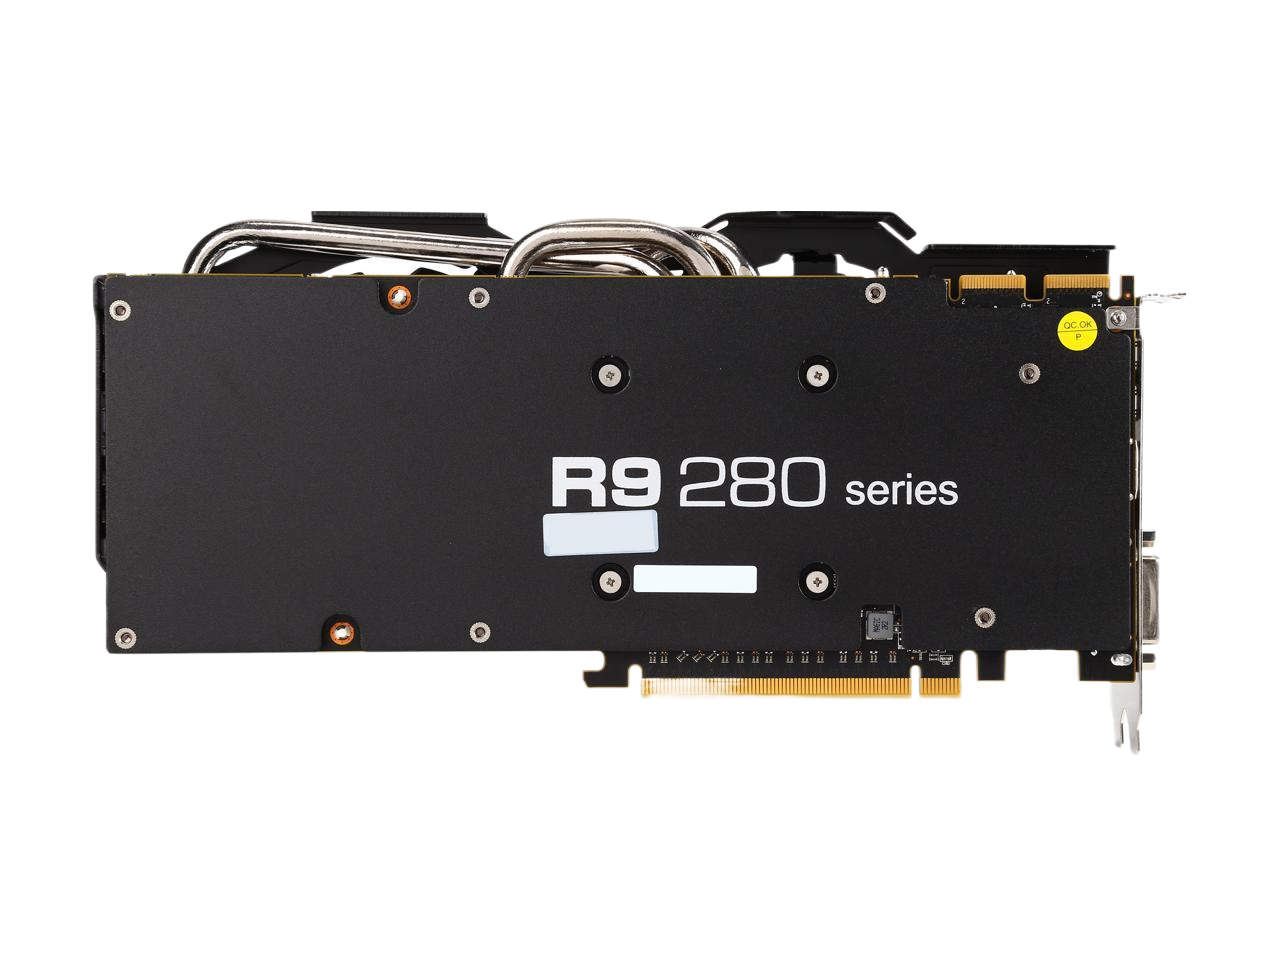 PowerColor TurboDuo Radeon R9 280 3GB GDDR5 PCI Express 3.0 CrossFireX Support Video Card AXR9 280 3GBD5-T2DHV2E/OC